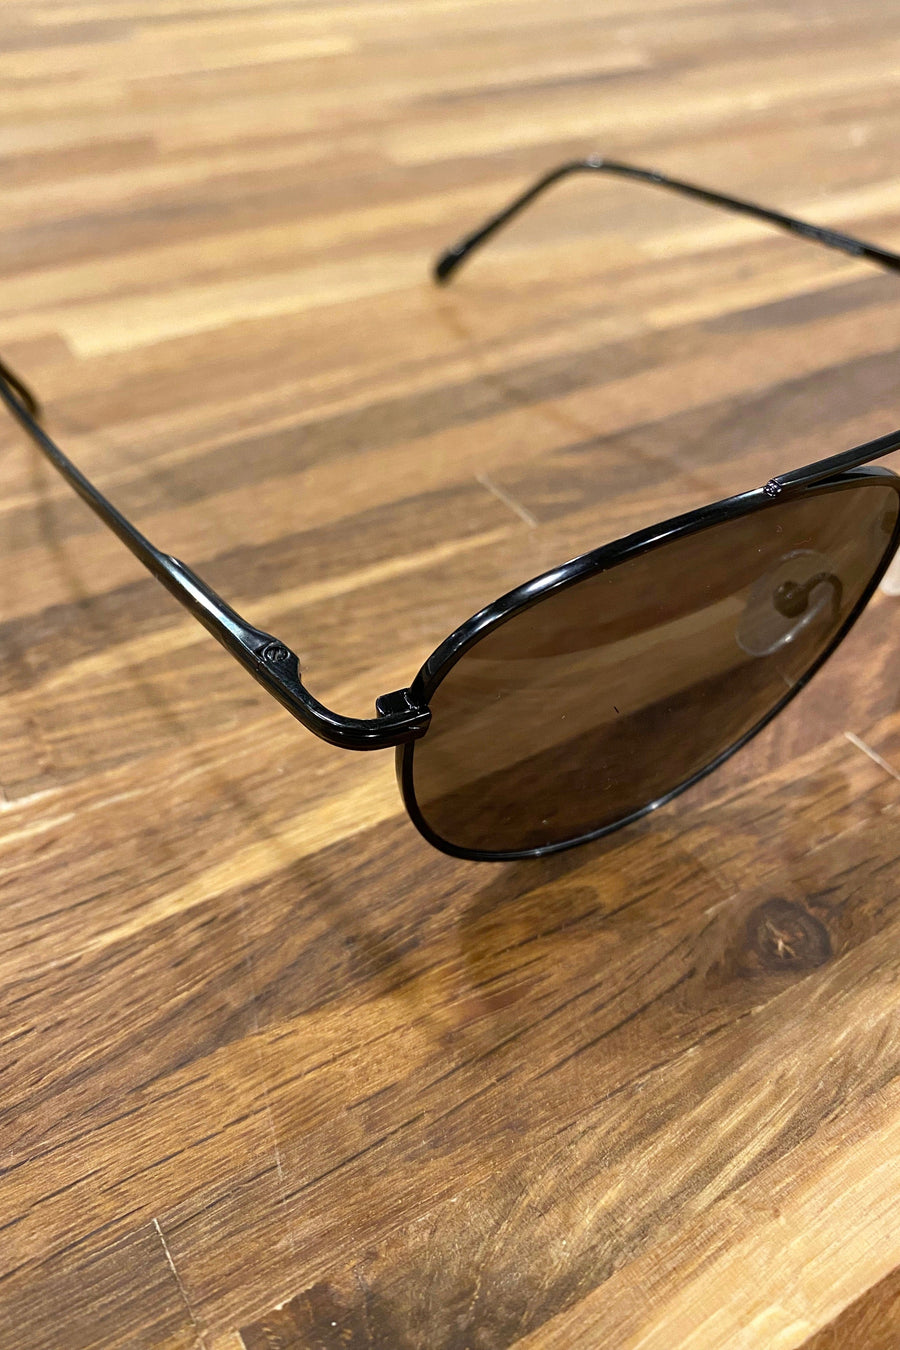 Thrifted Black Aviator Sunglasses